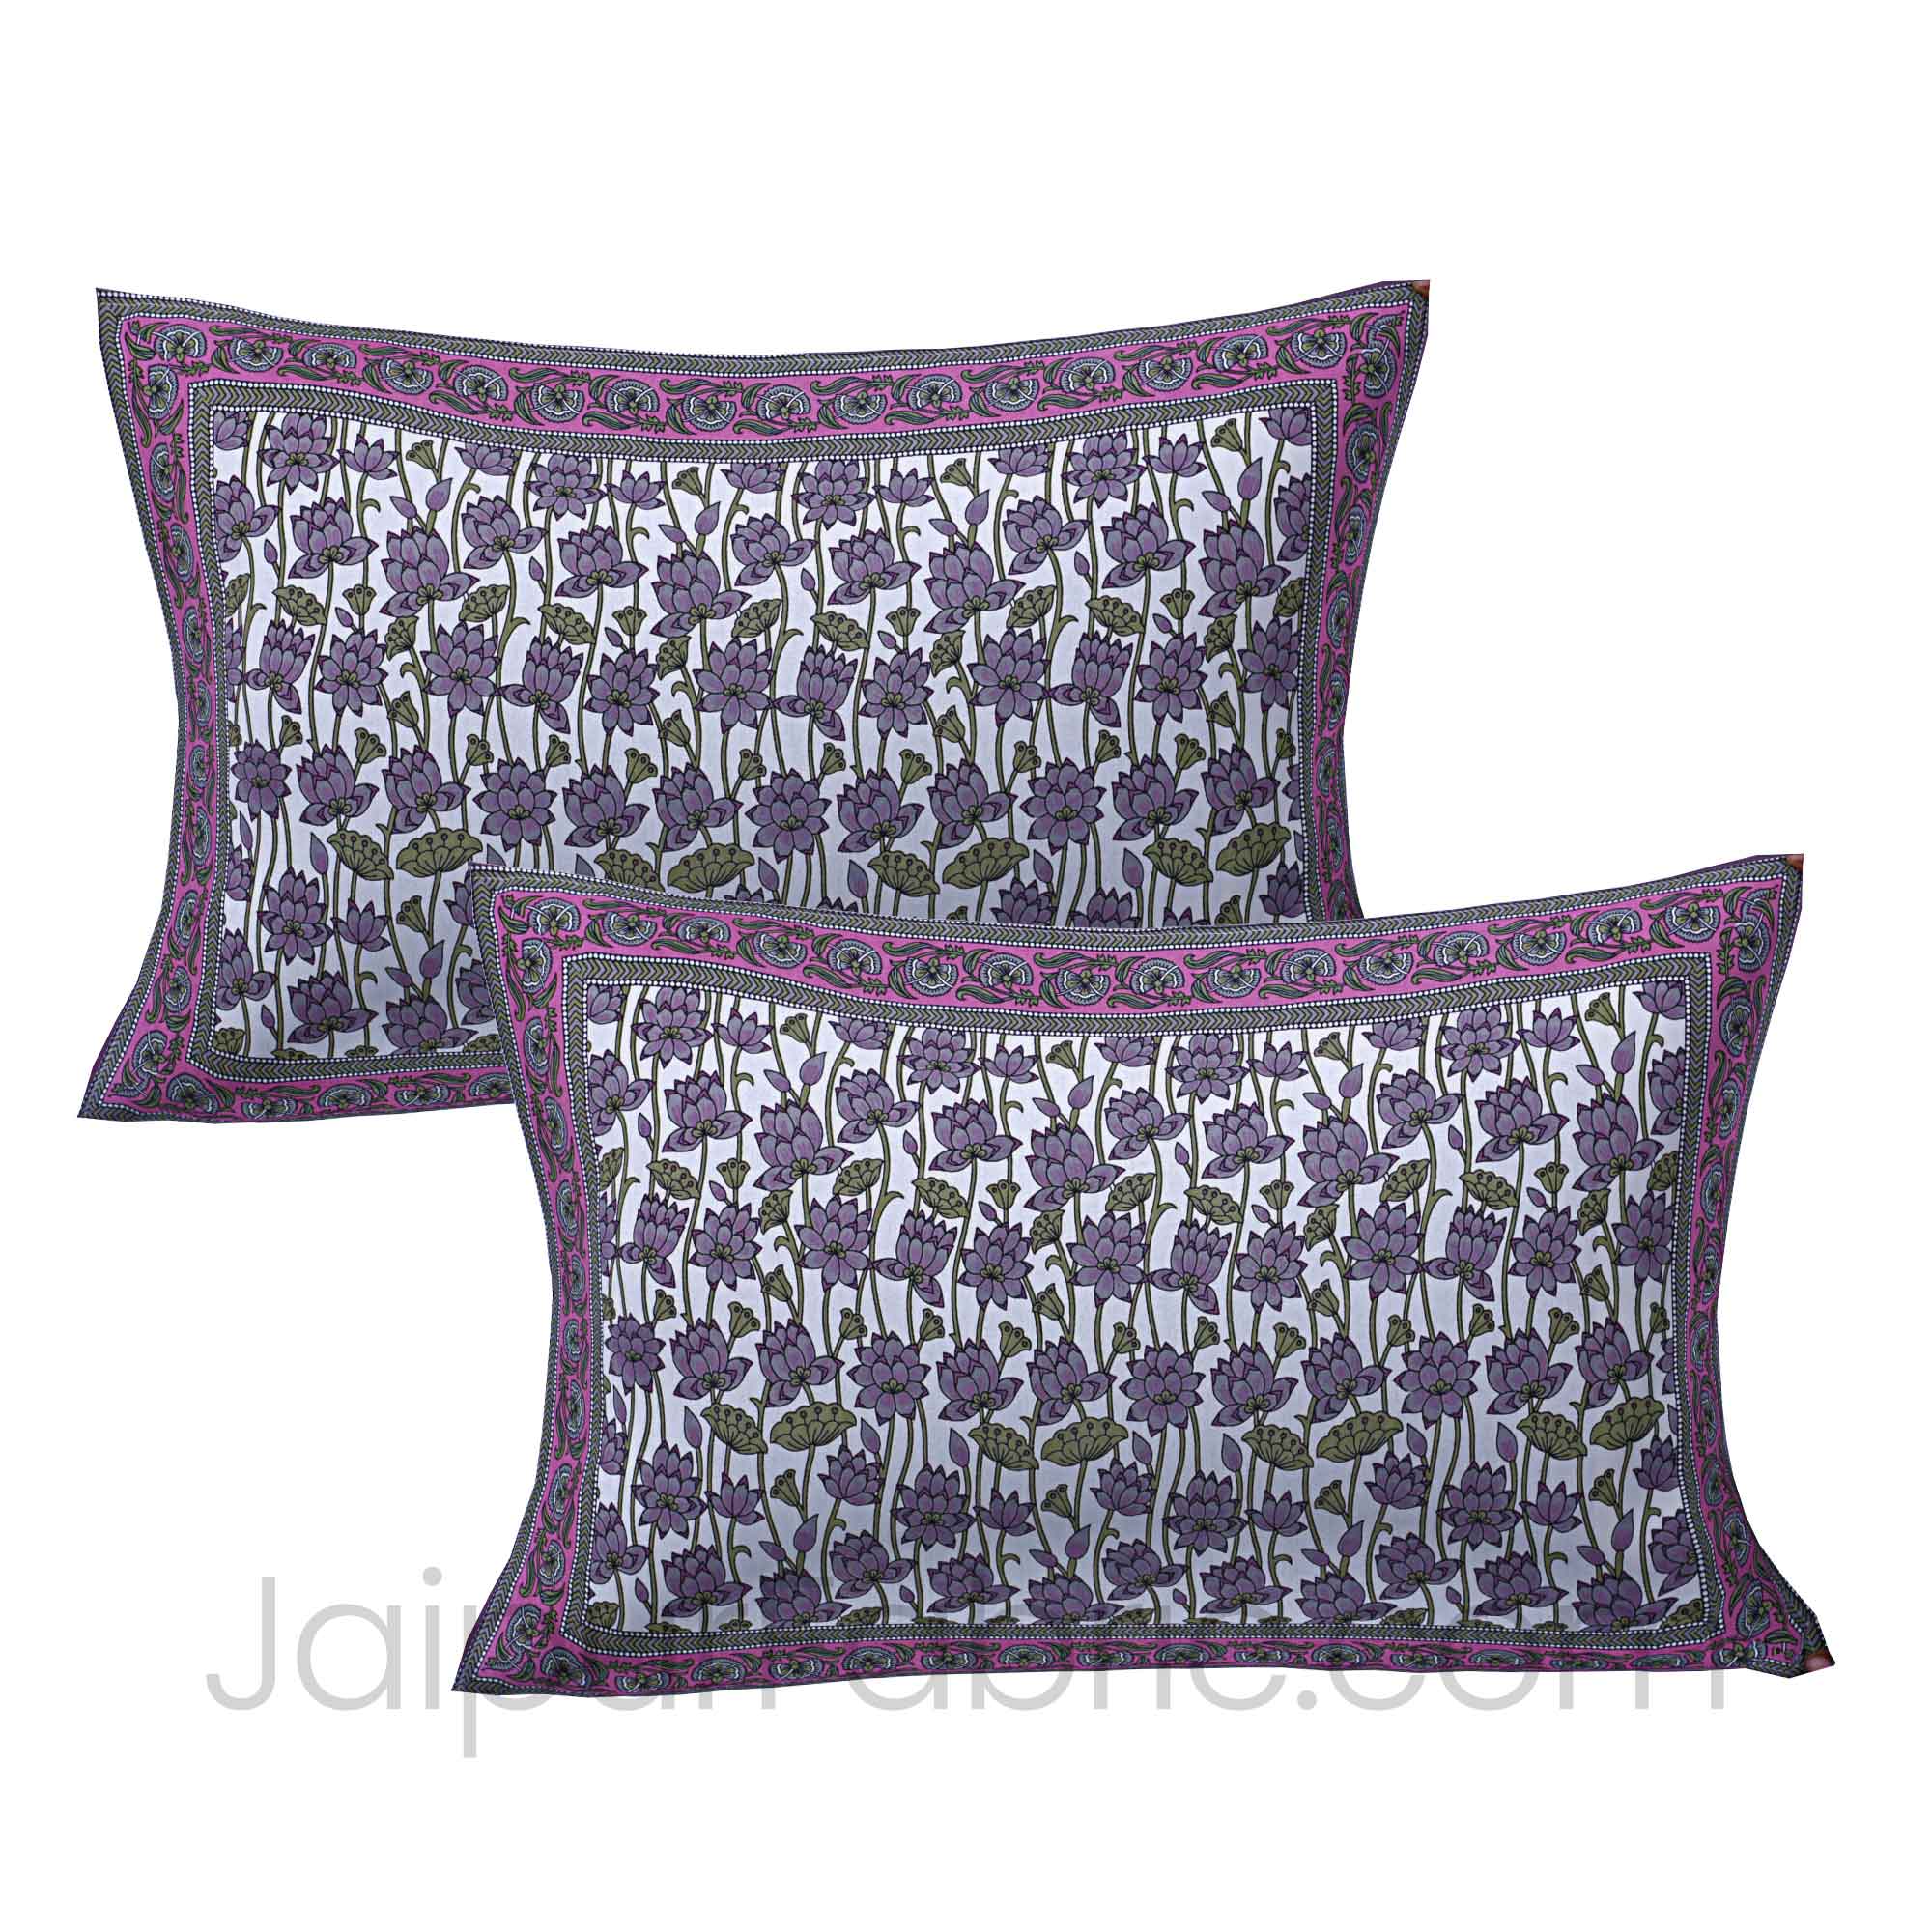 Fresh Garden Purple Grey Double Bedsheet